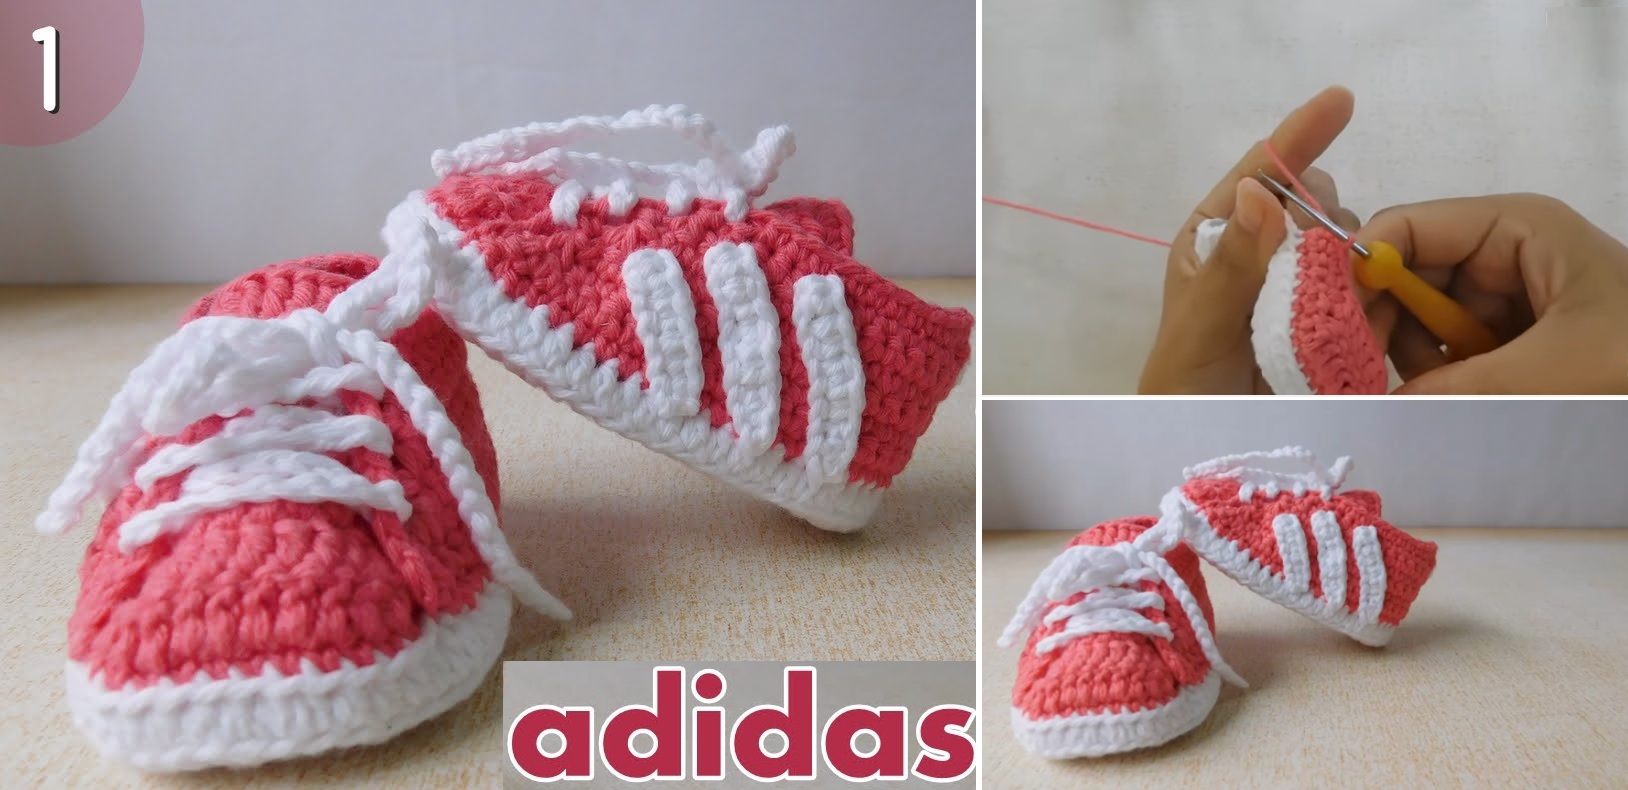 crochet baby adidas